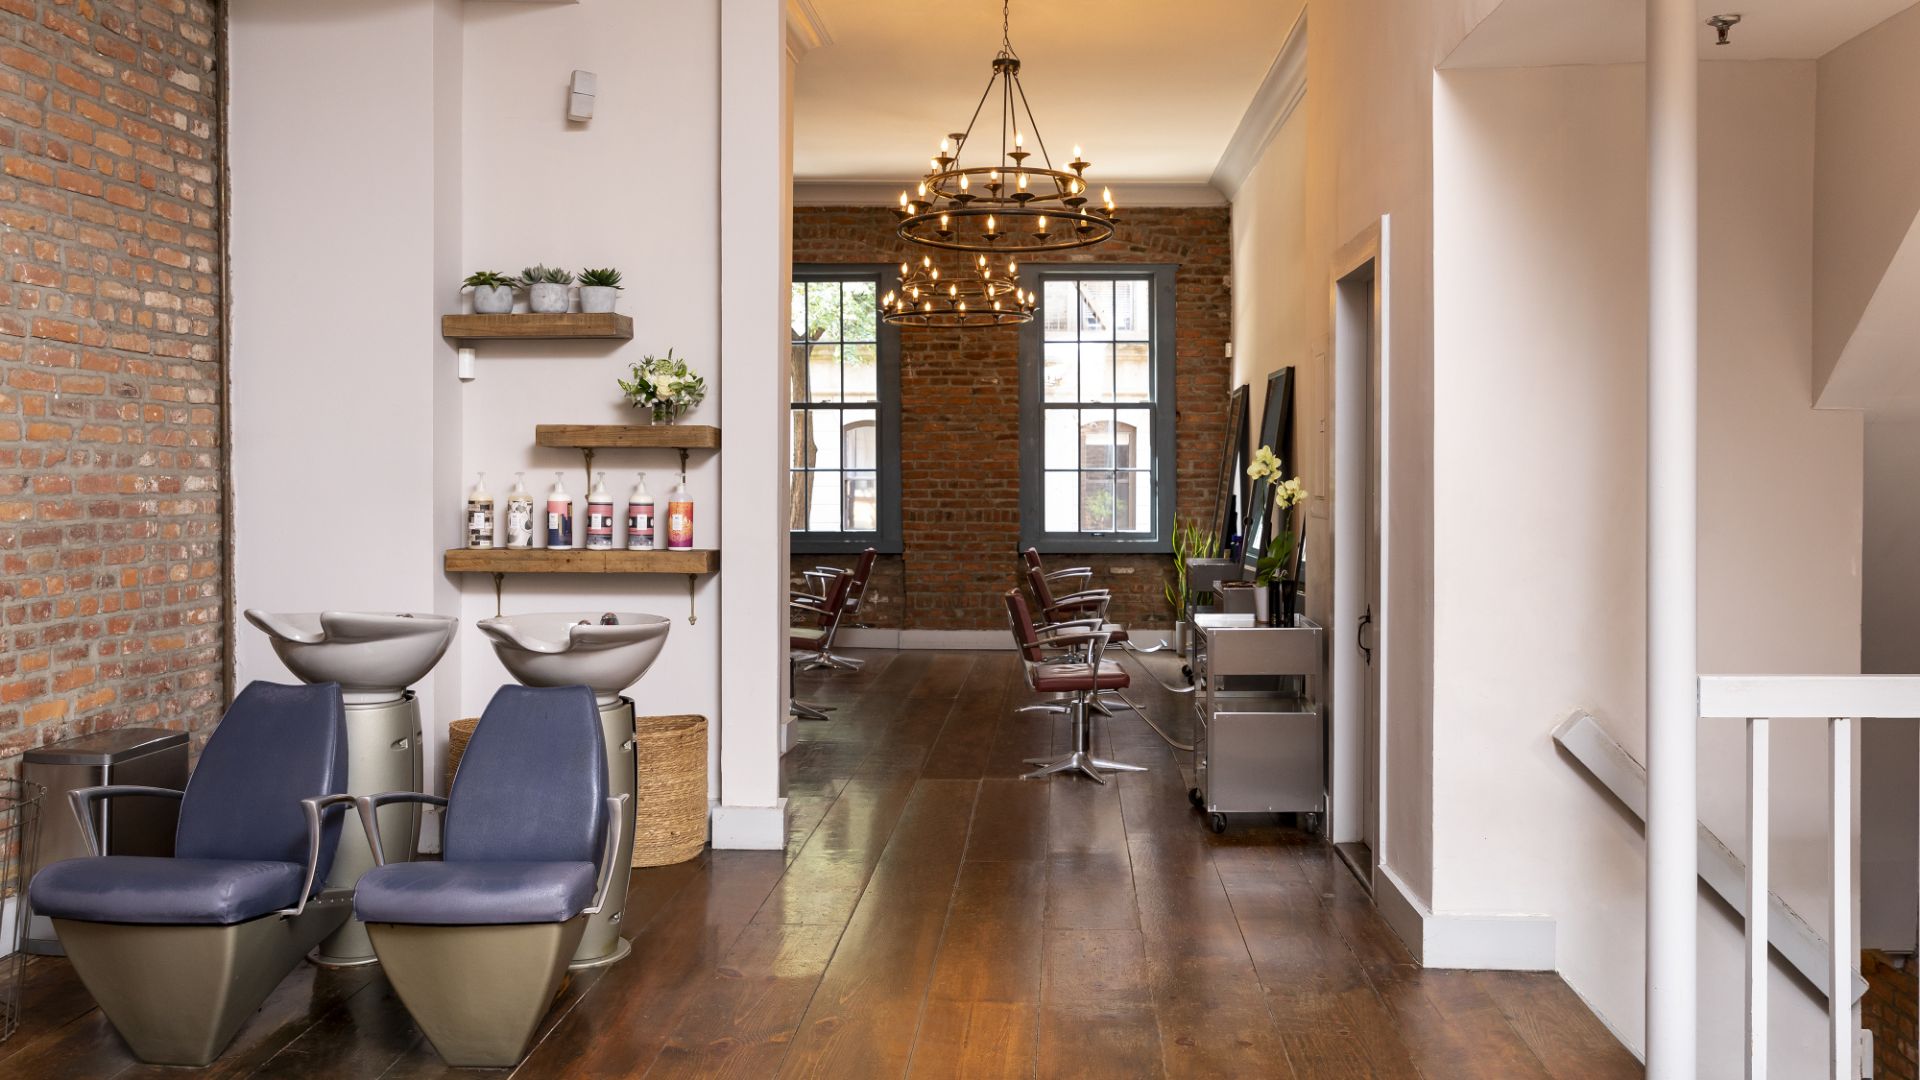 New York hair salon heritage interior with back basins